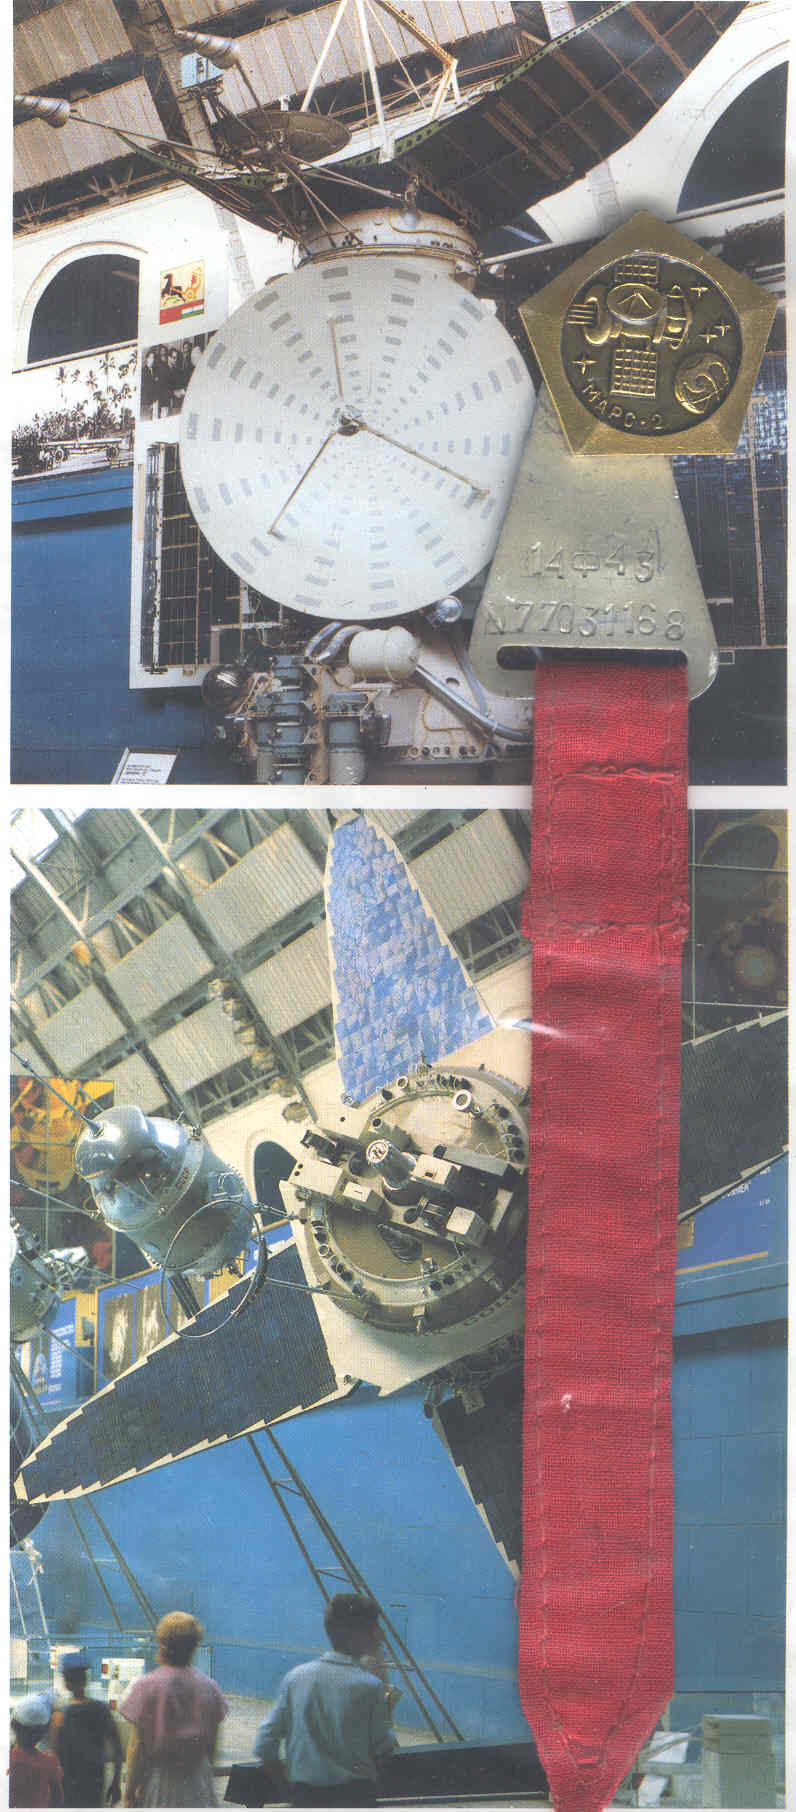 # pf106 Mars-2 pin flown on Resource-F1M